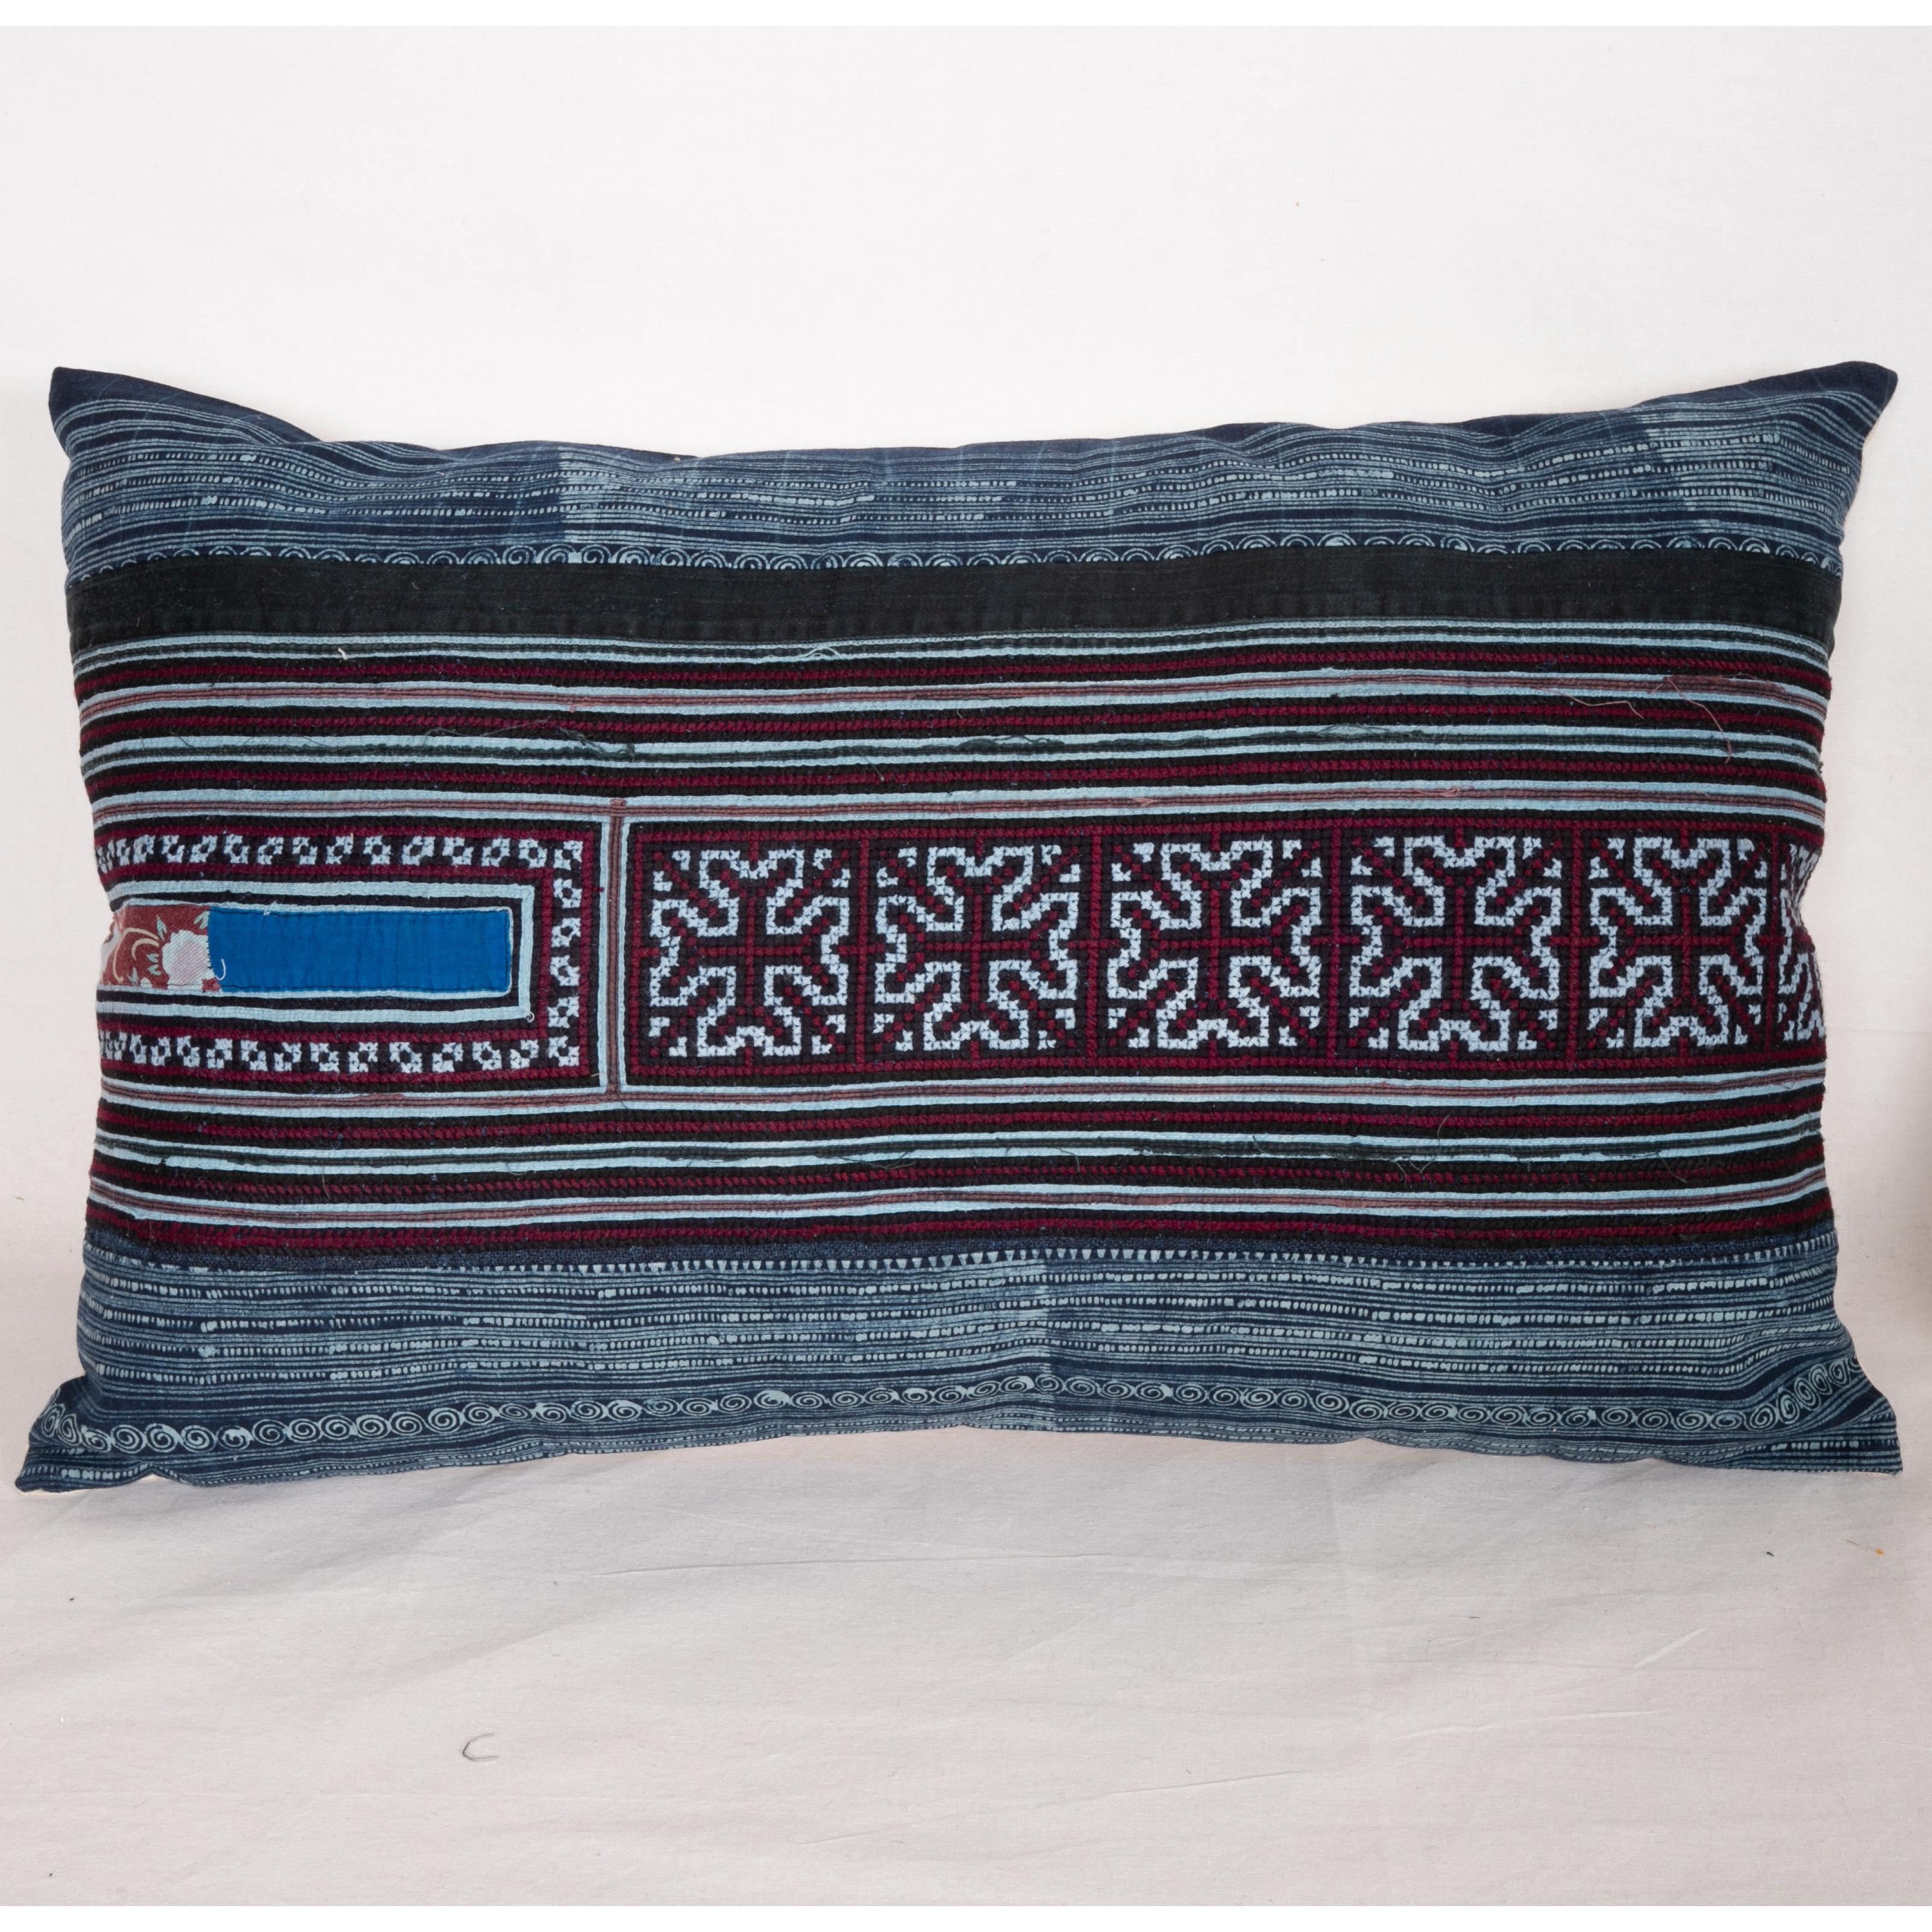 Tribal Batik Pillow Cases / Cushions Made from a Hmong Hill Tribe Batik Textile